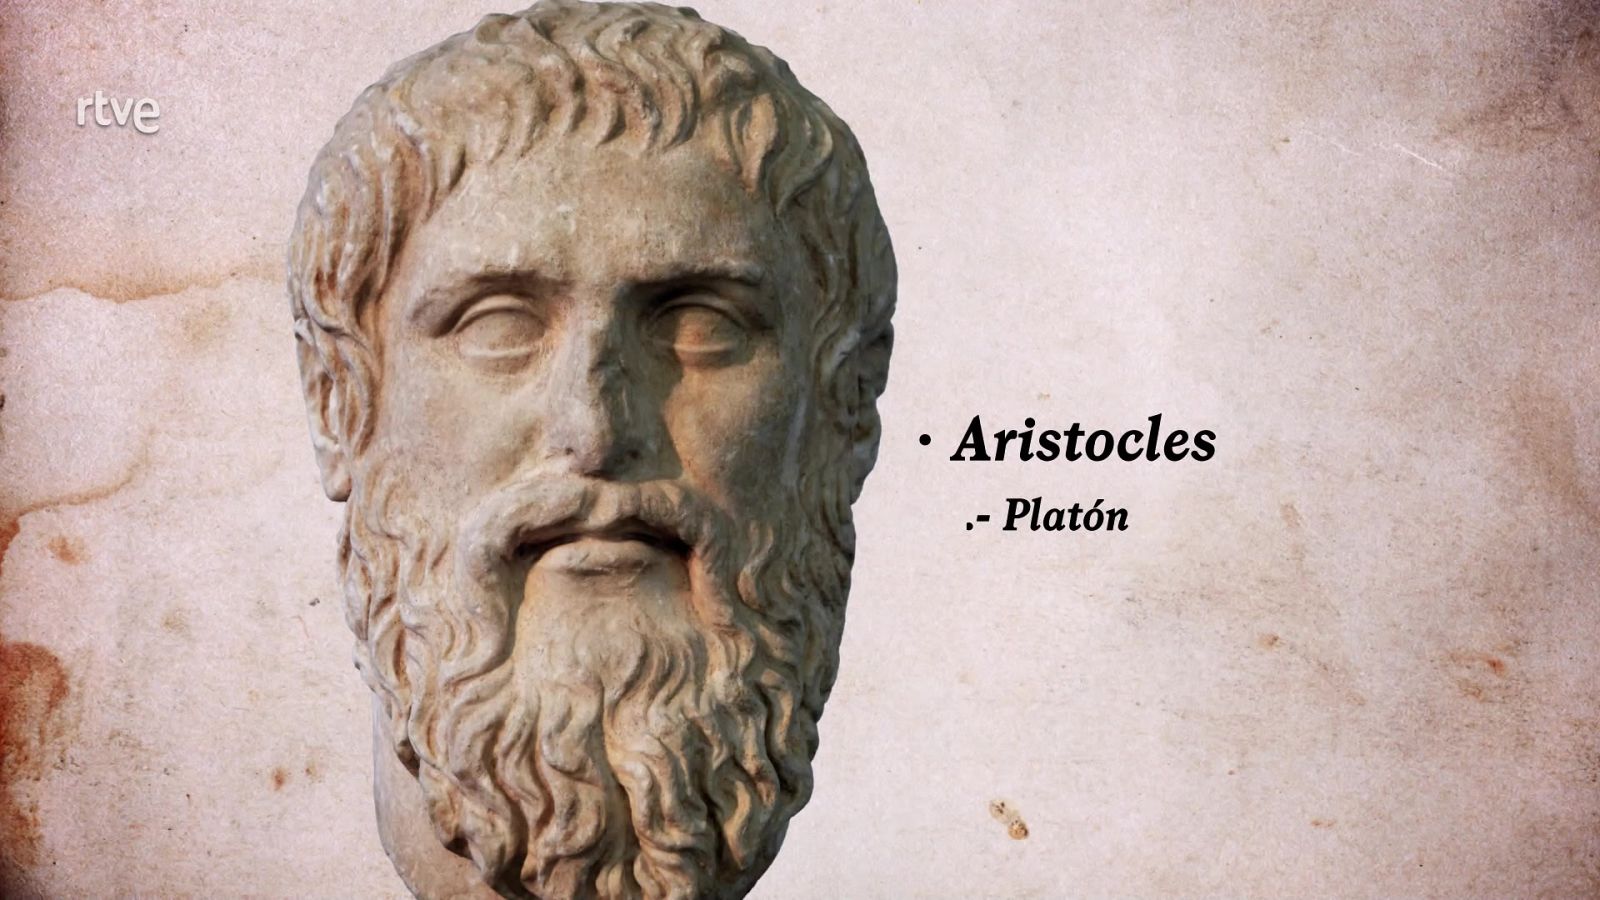 This is Philosophy - Platón